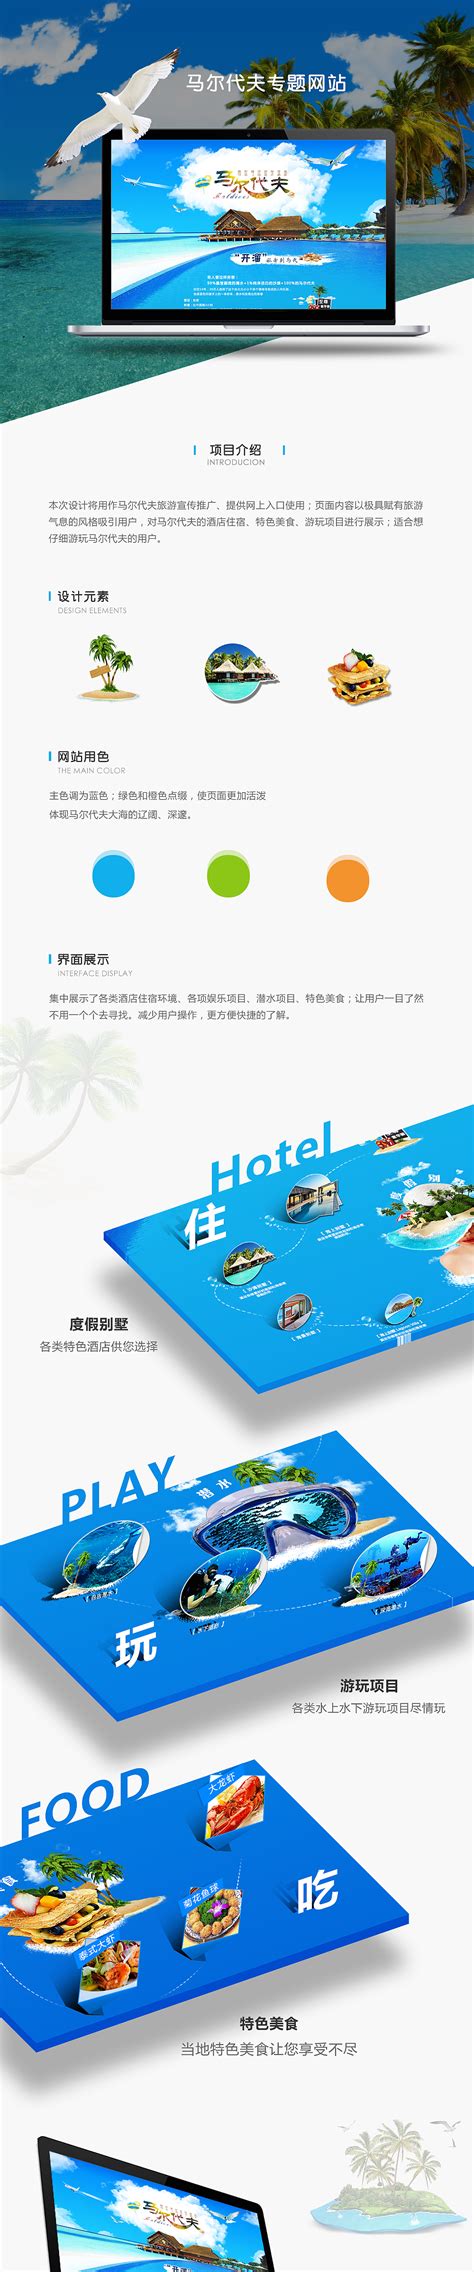 UI设计旅游APP首页界面模板素材-正版图片401551023-摄图网